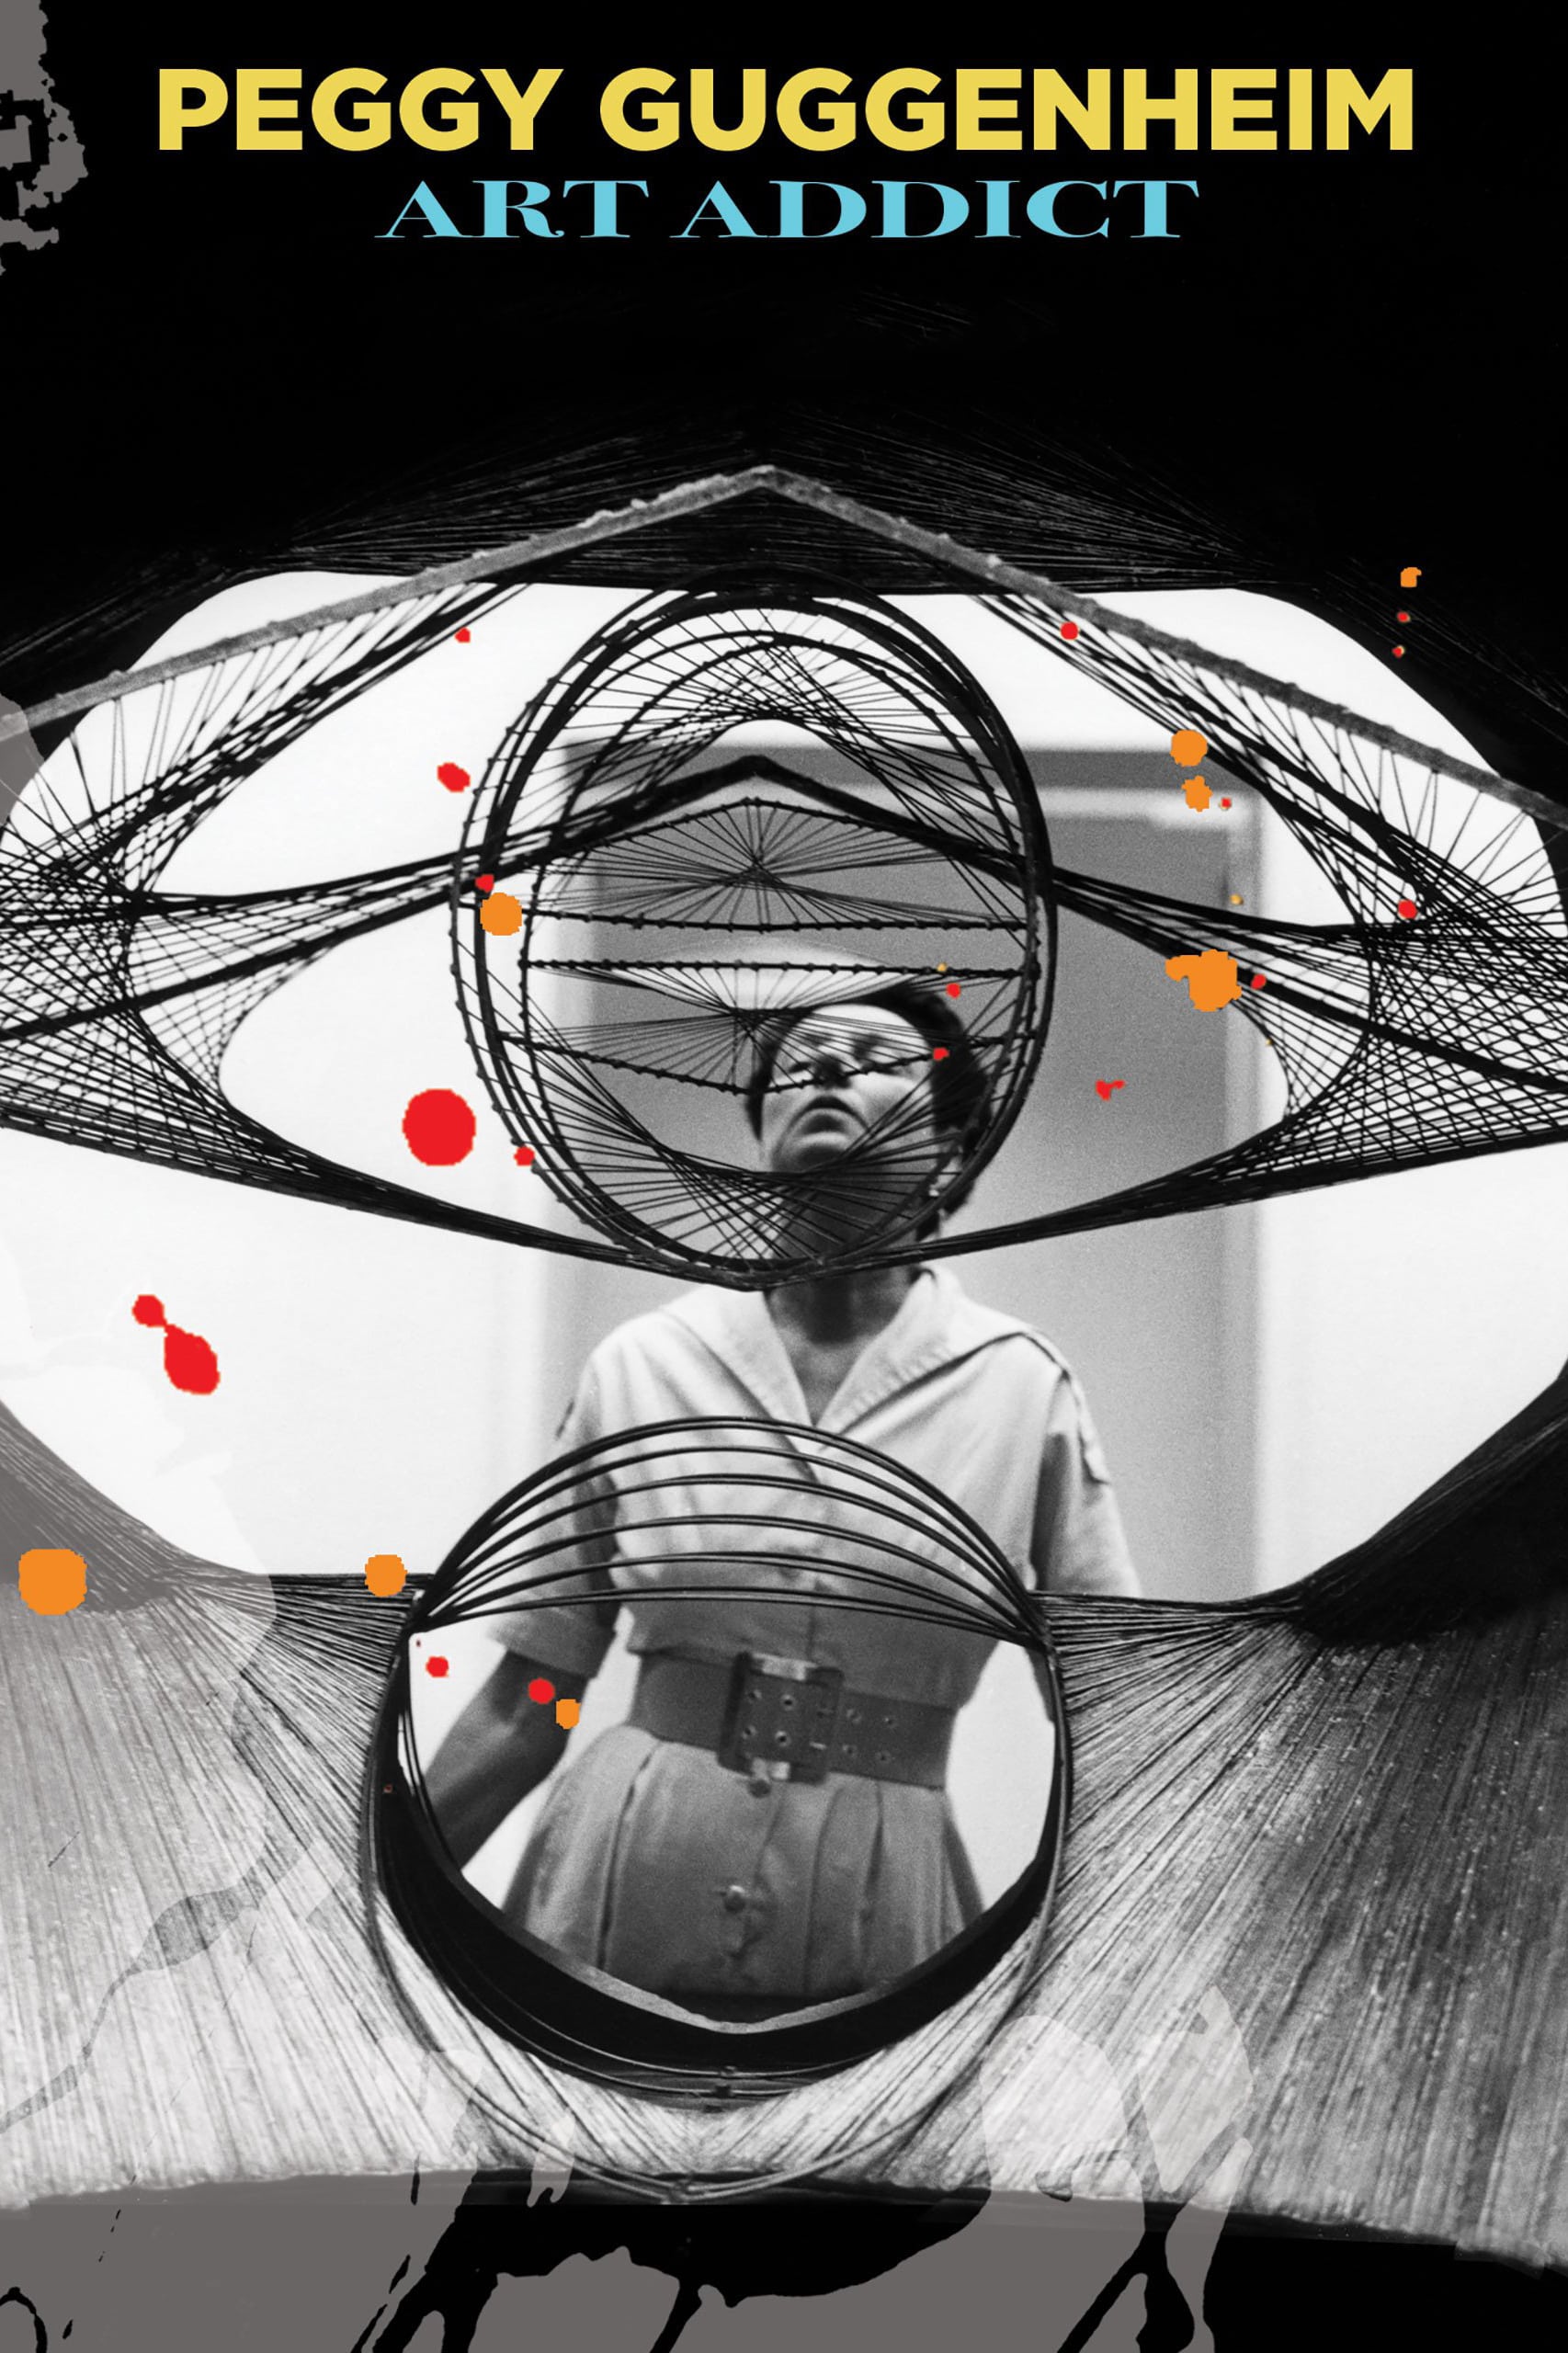 Peggy Guggenheim: Art Addict (2015)